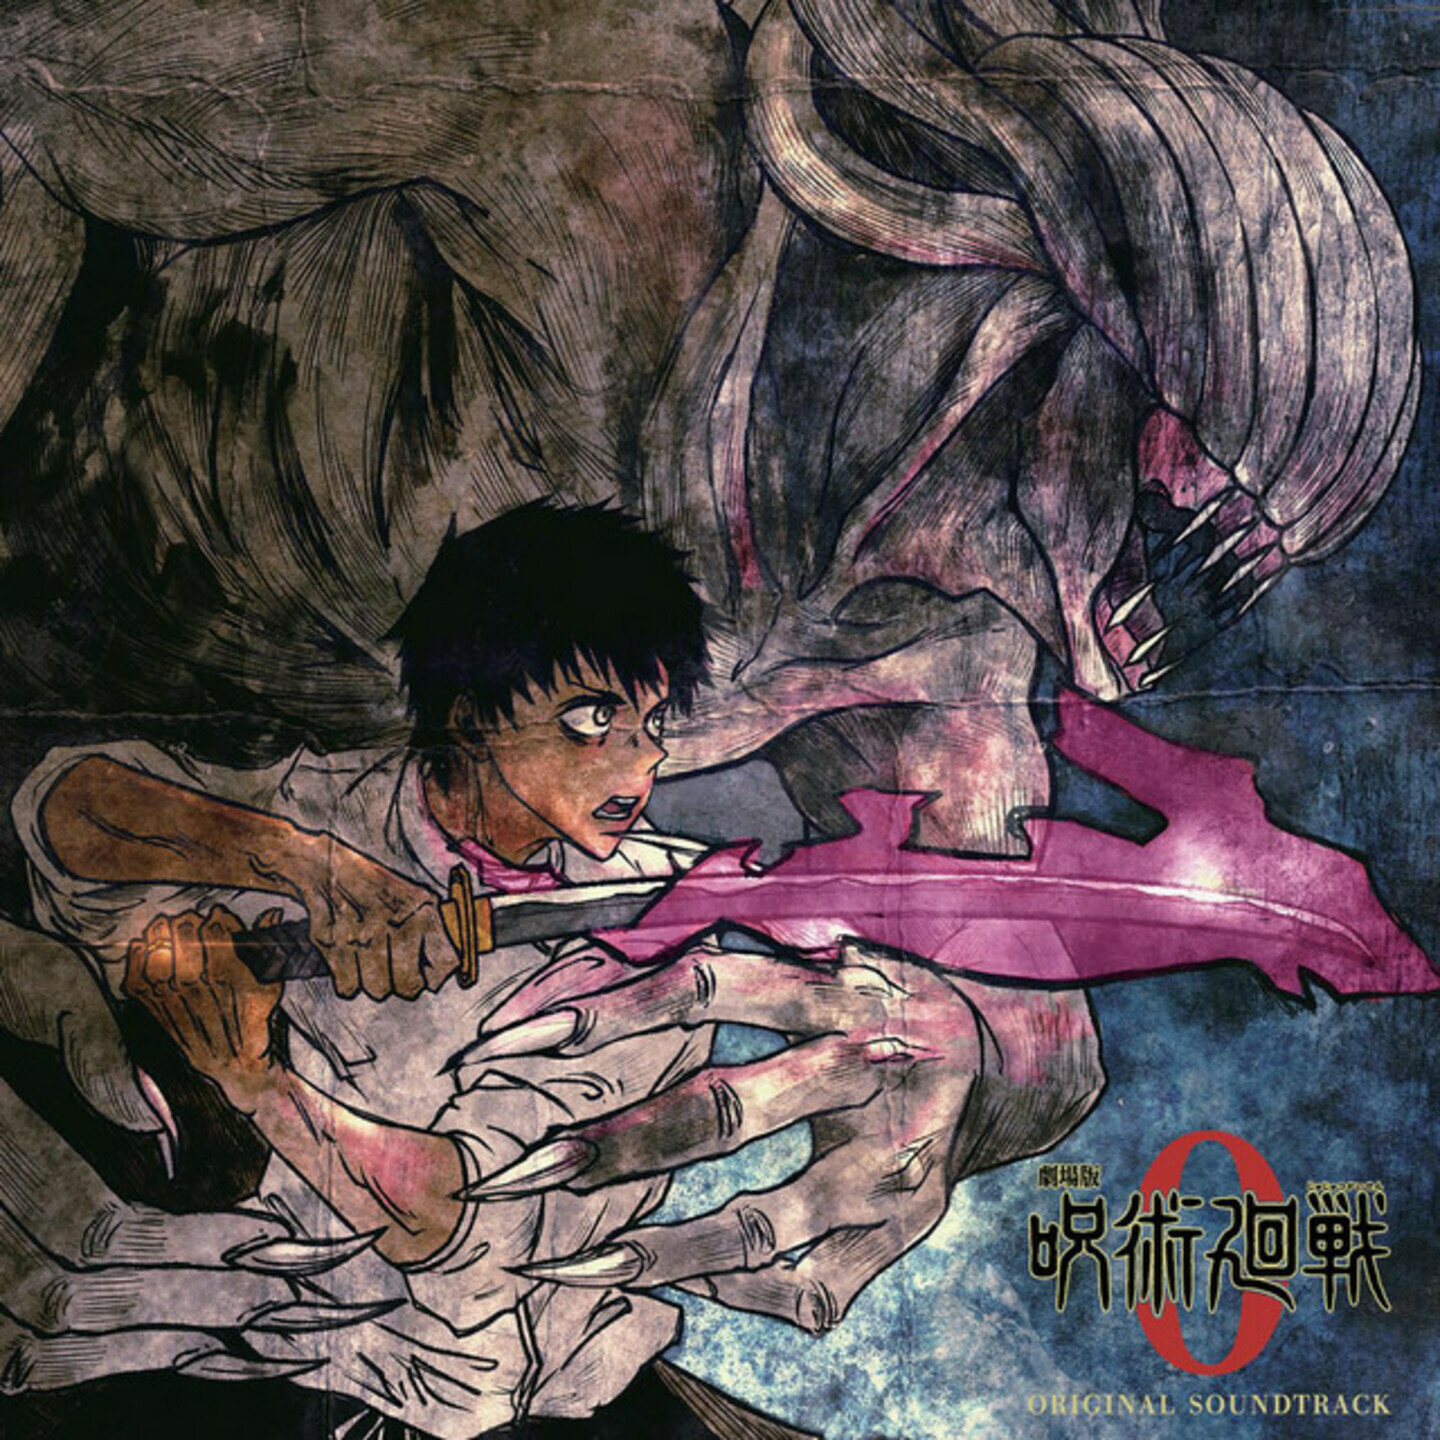 V/A - Jujutsu Kaisen 0 (Official Soundtrack) 3xLP (Black Red White Splatter Vinyl)